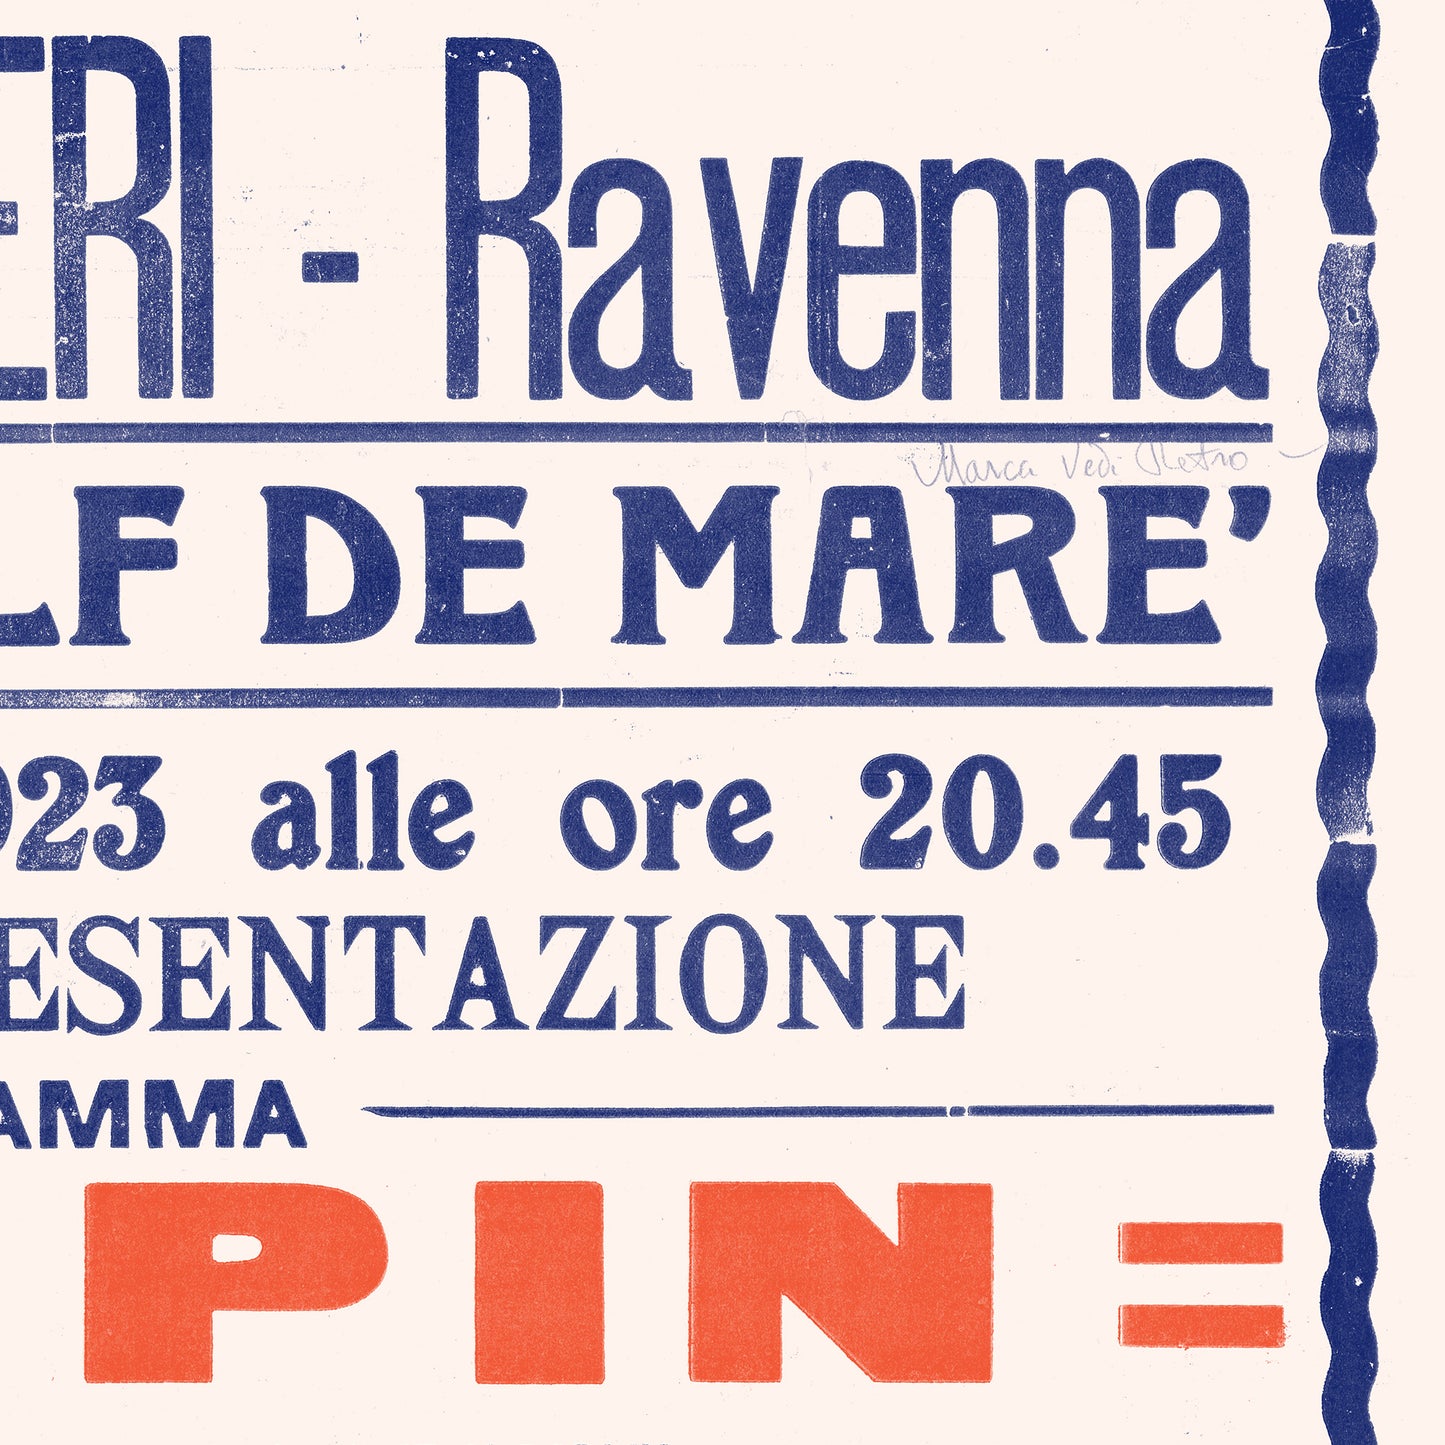 Affiche : Teatro Alighieri Ravenna